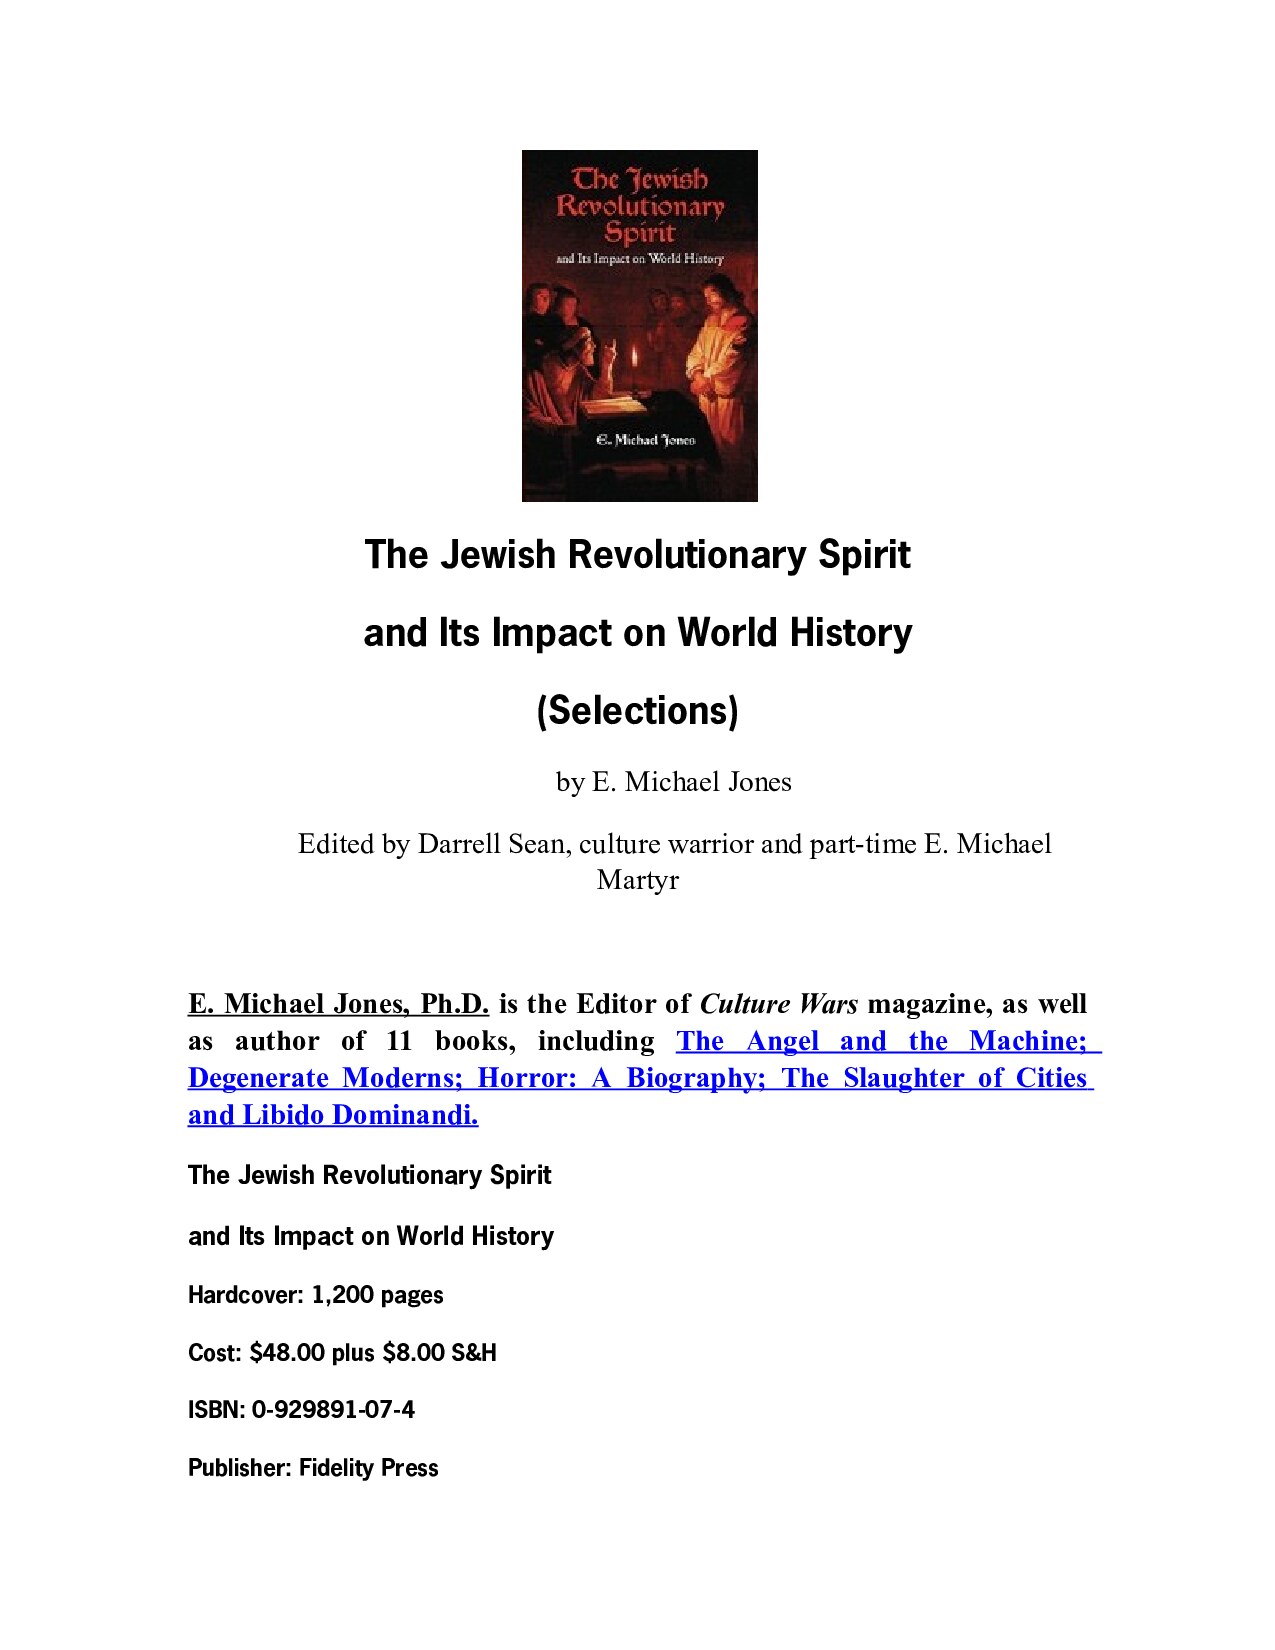 Jones, E. Michael; The Jewish Revolutionary Spirit And Its Impact On World History